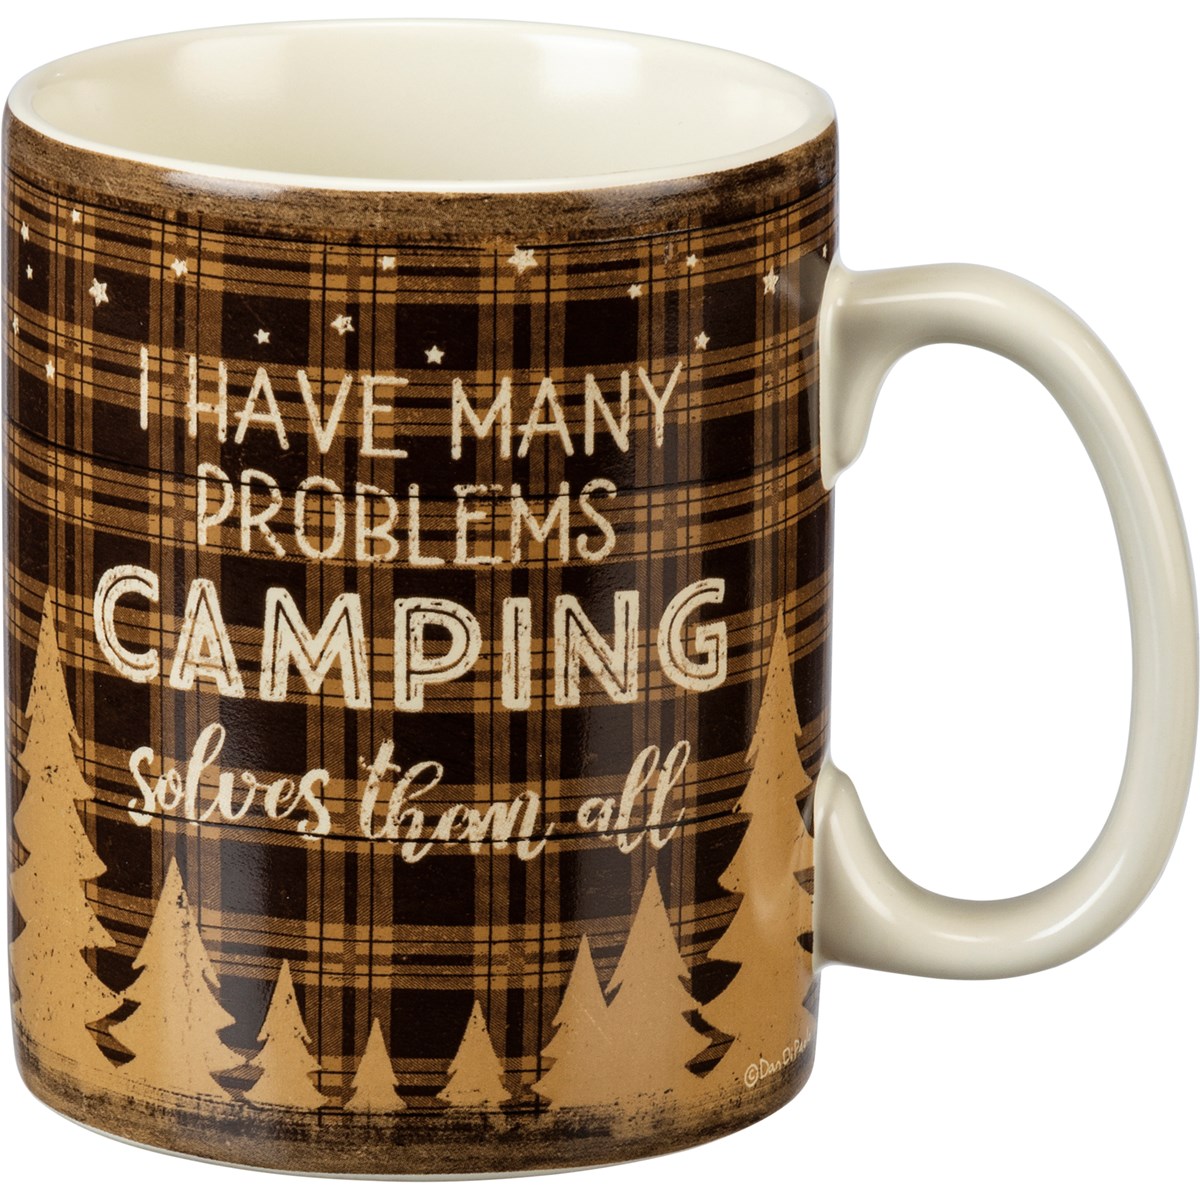 Many Problems Camping Solves Them All Mug - Stoneware